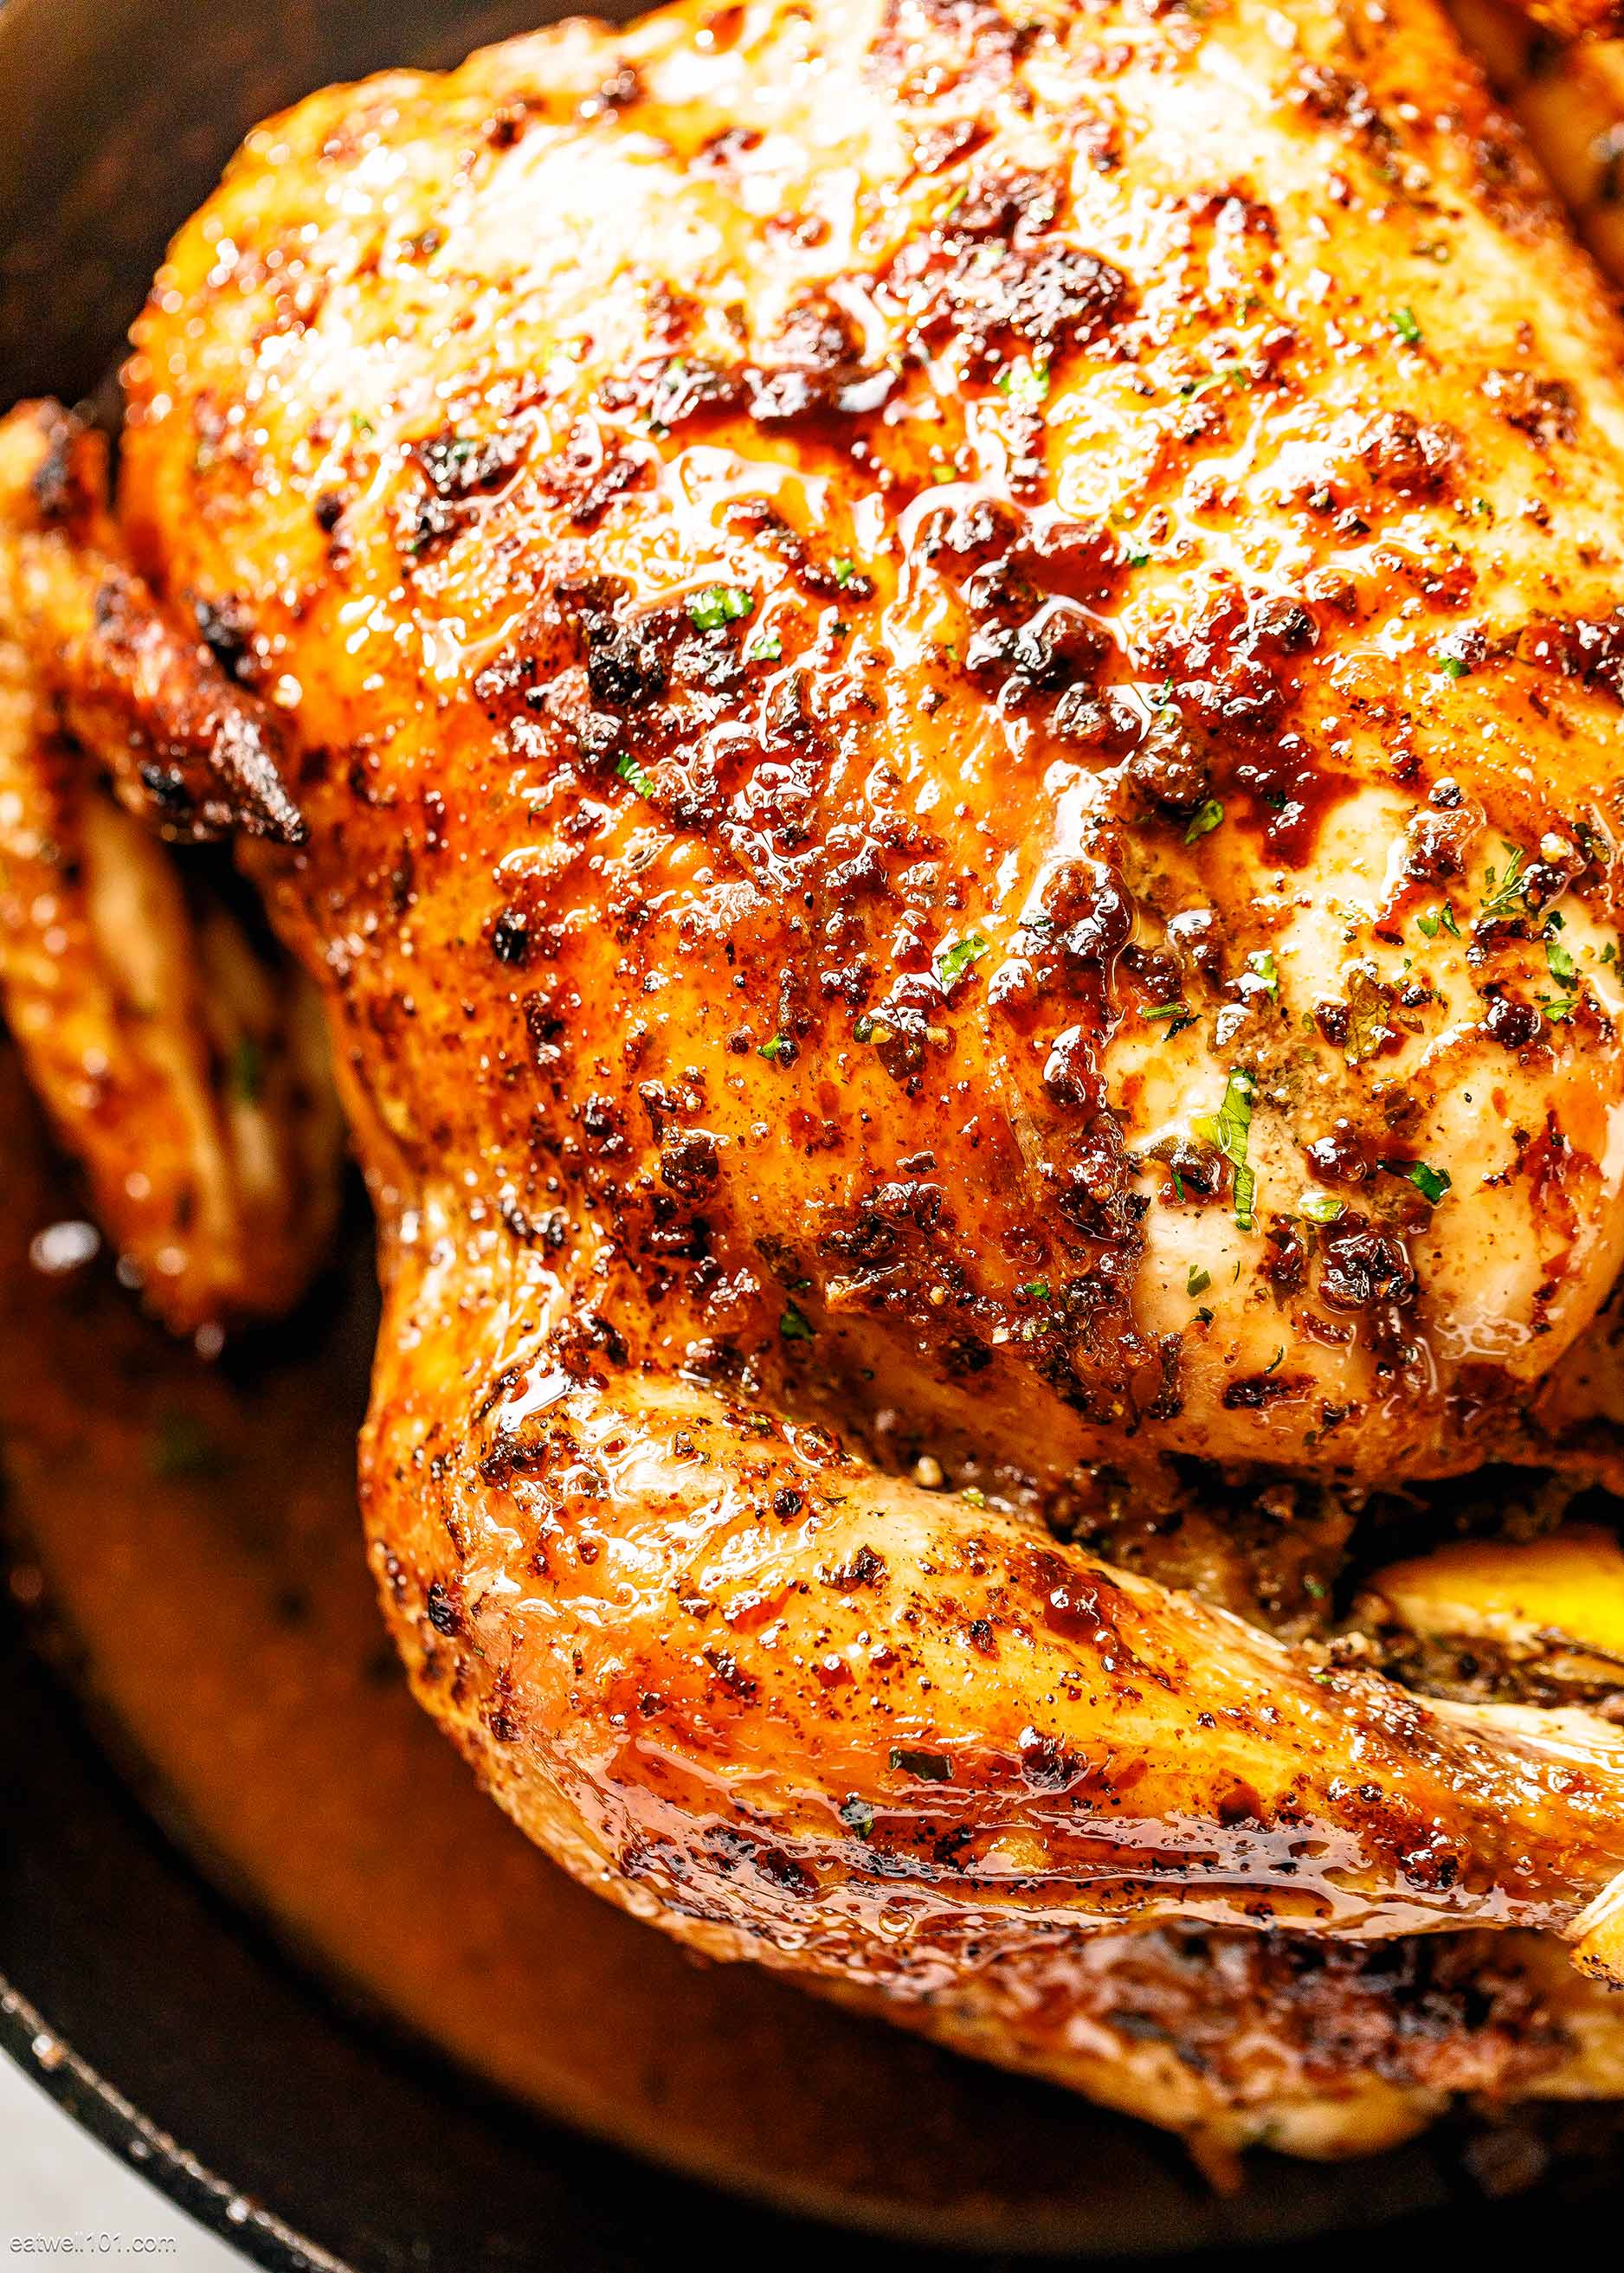 https://www.eatwell101.com/wp-content/uploads/2020/11/Roasted-Chicken-recipe-4.jpg